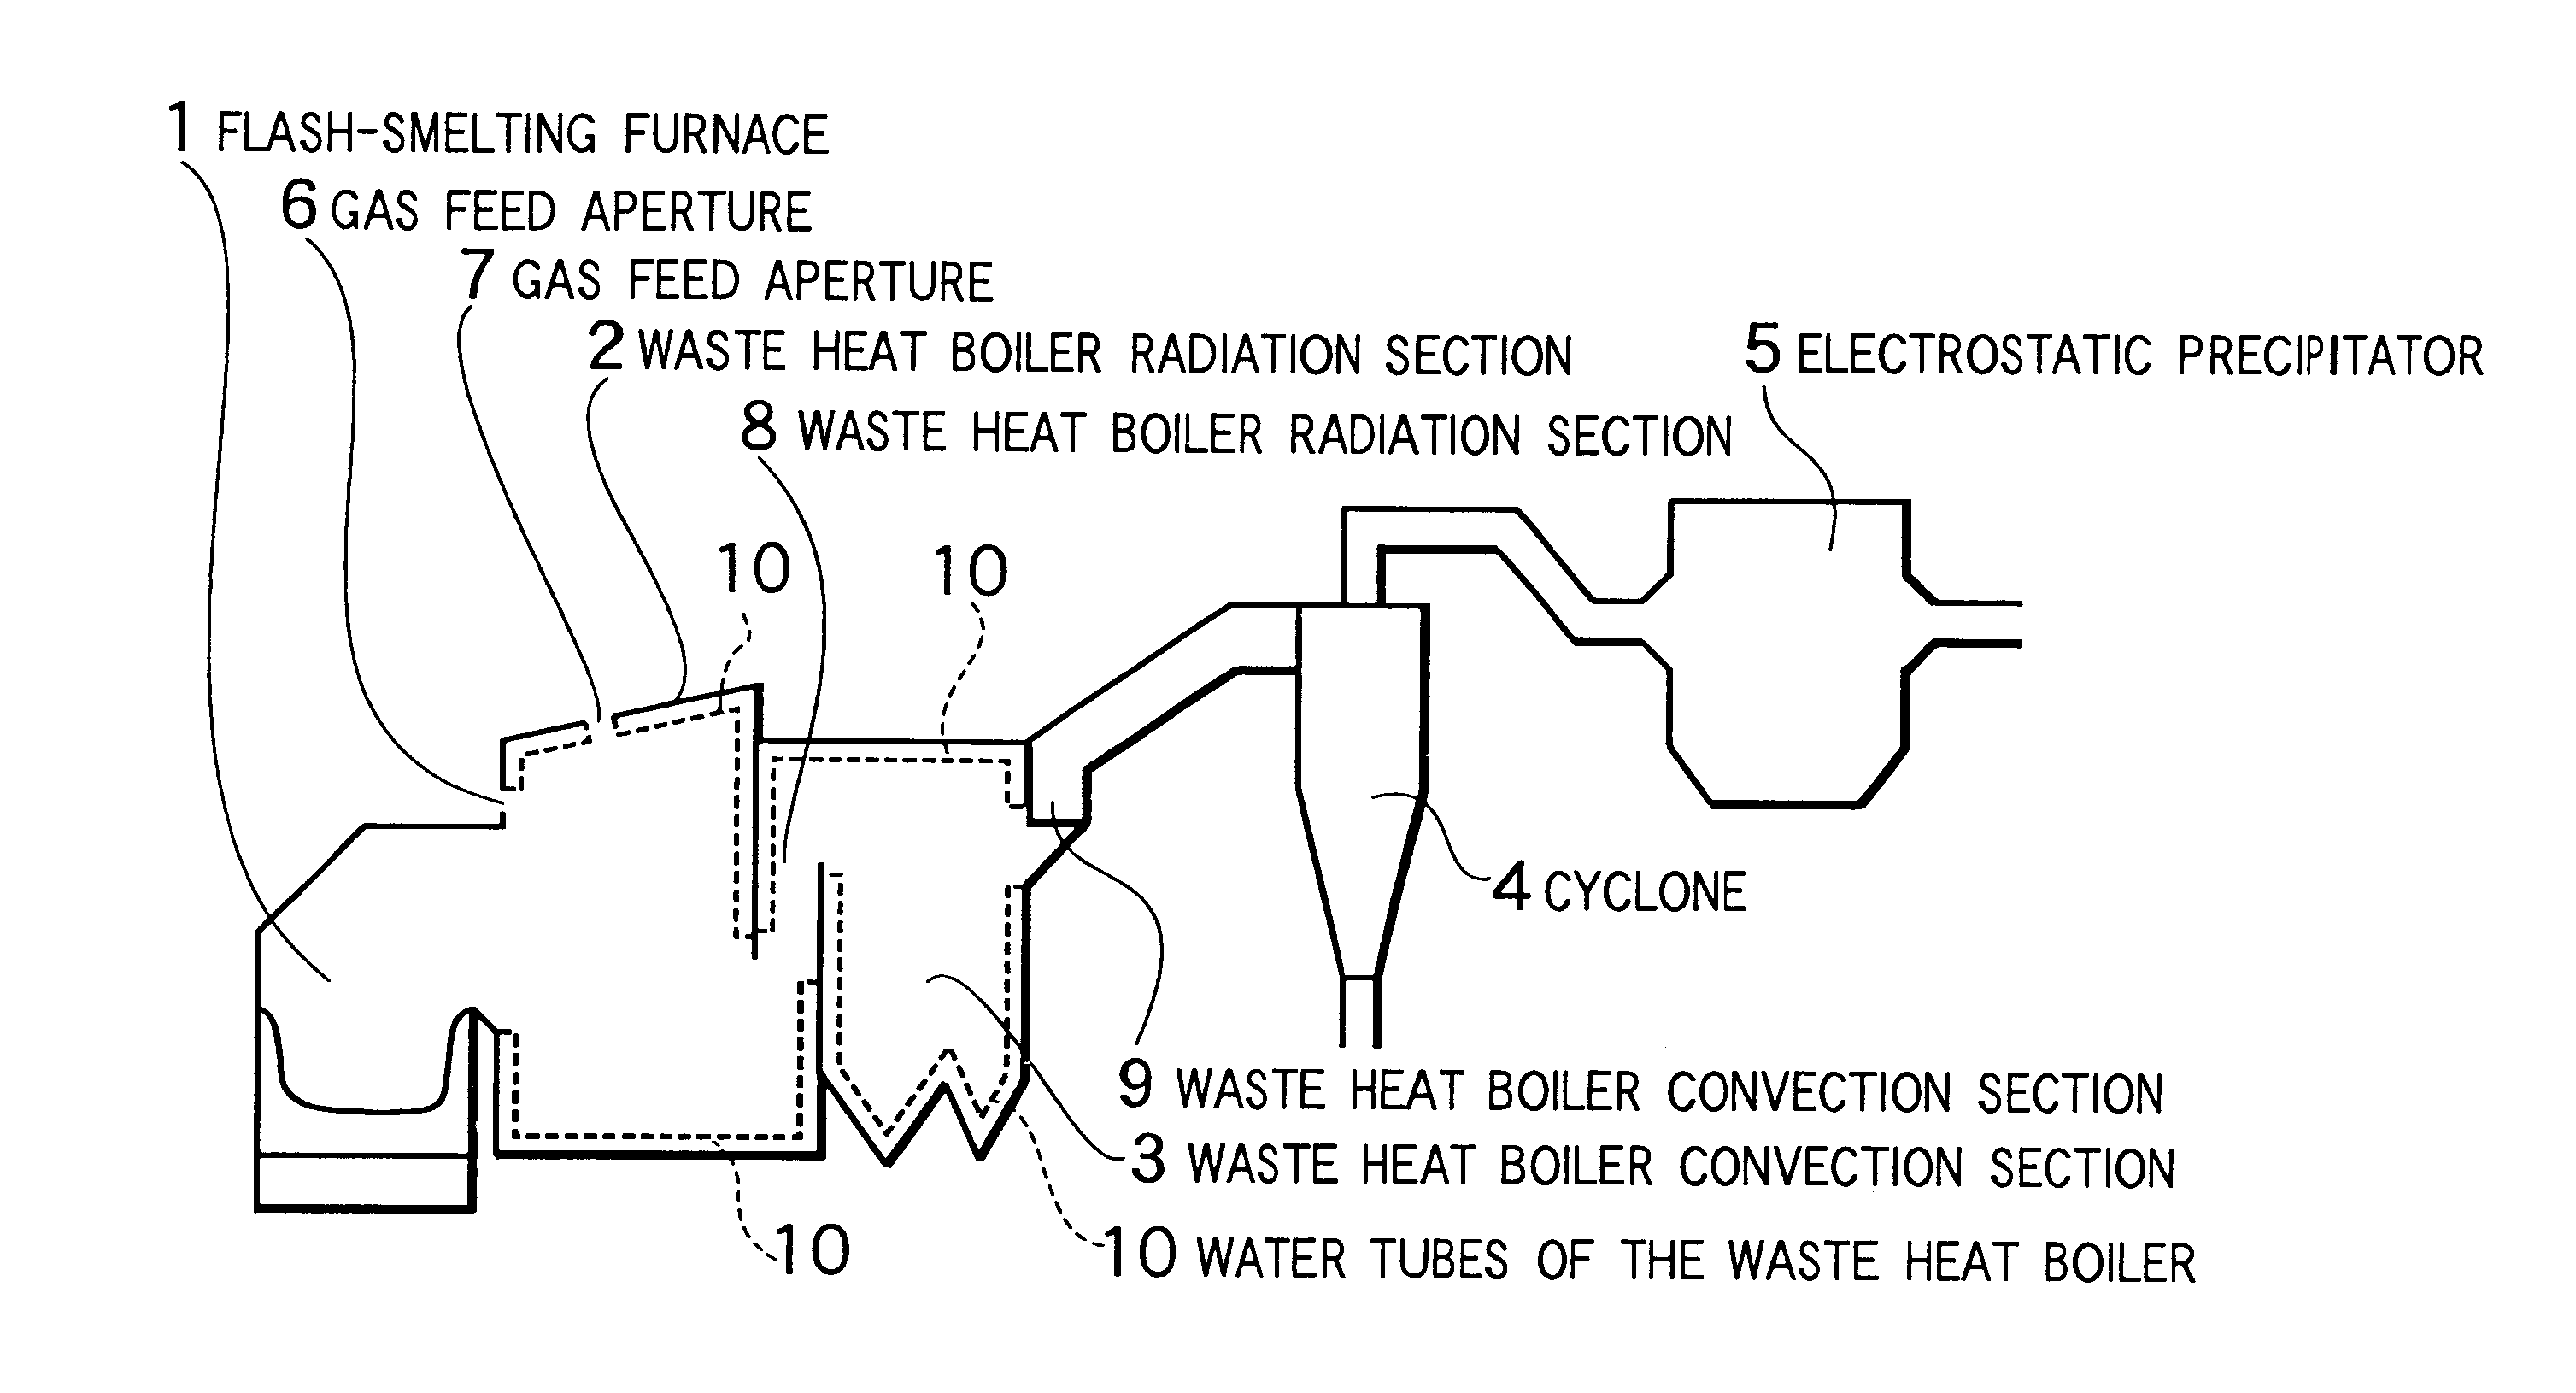 Method for operating waste heat boiler in flash-smelting furnace